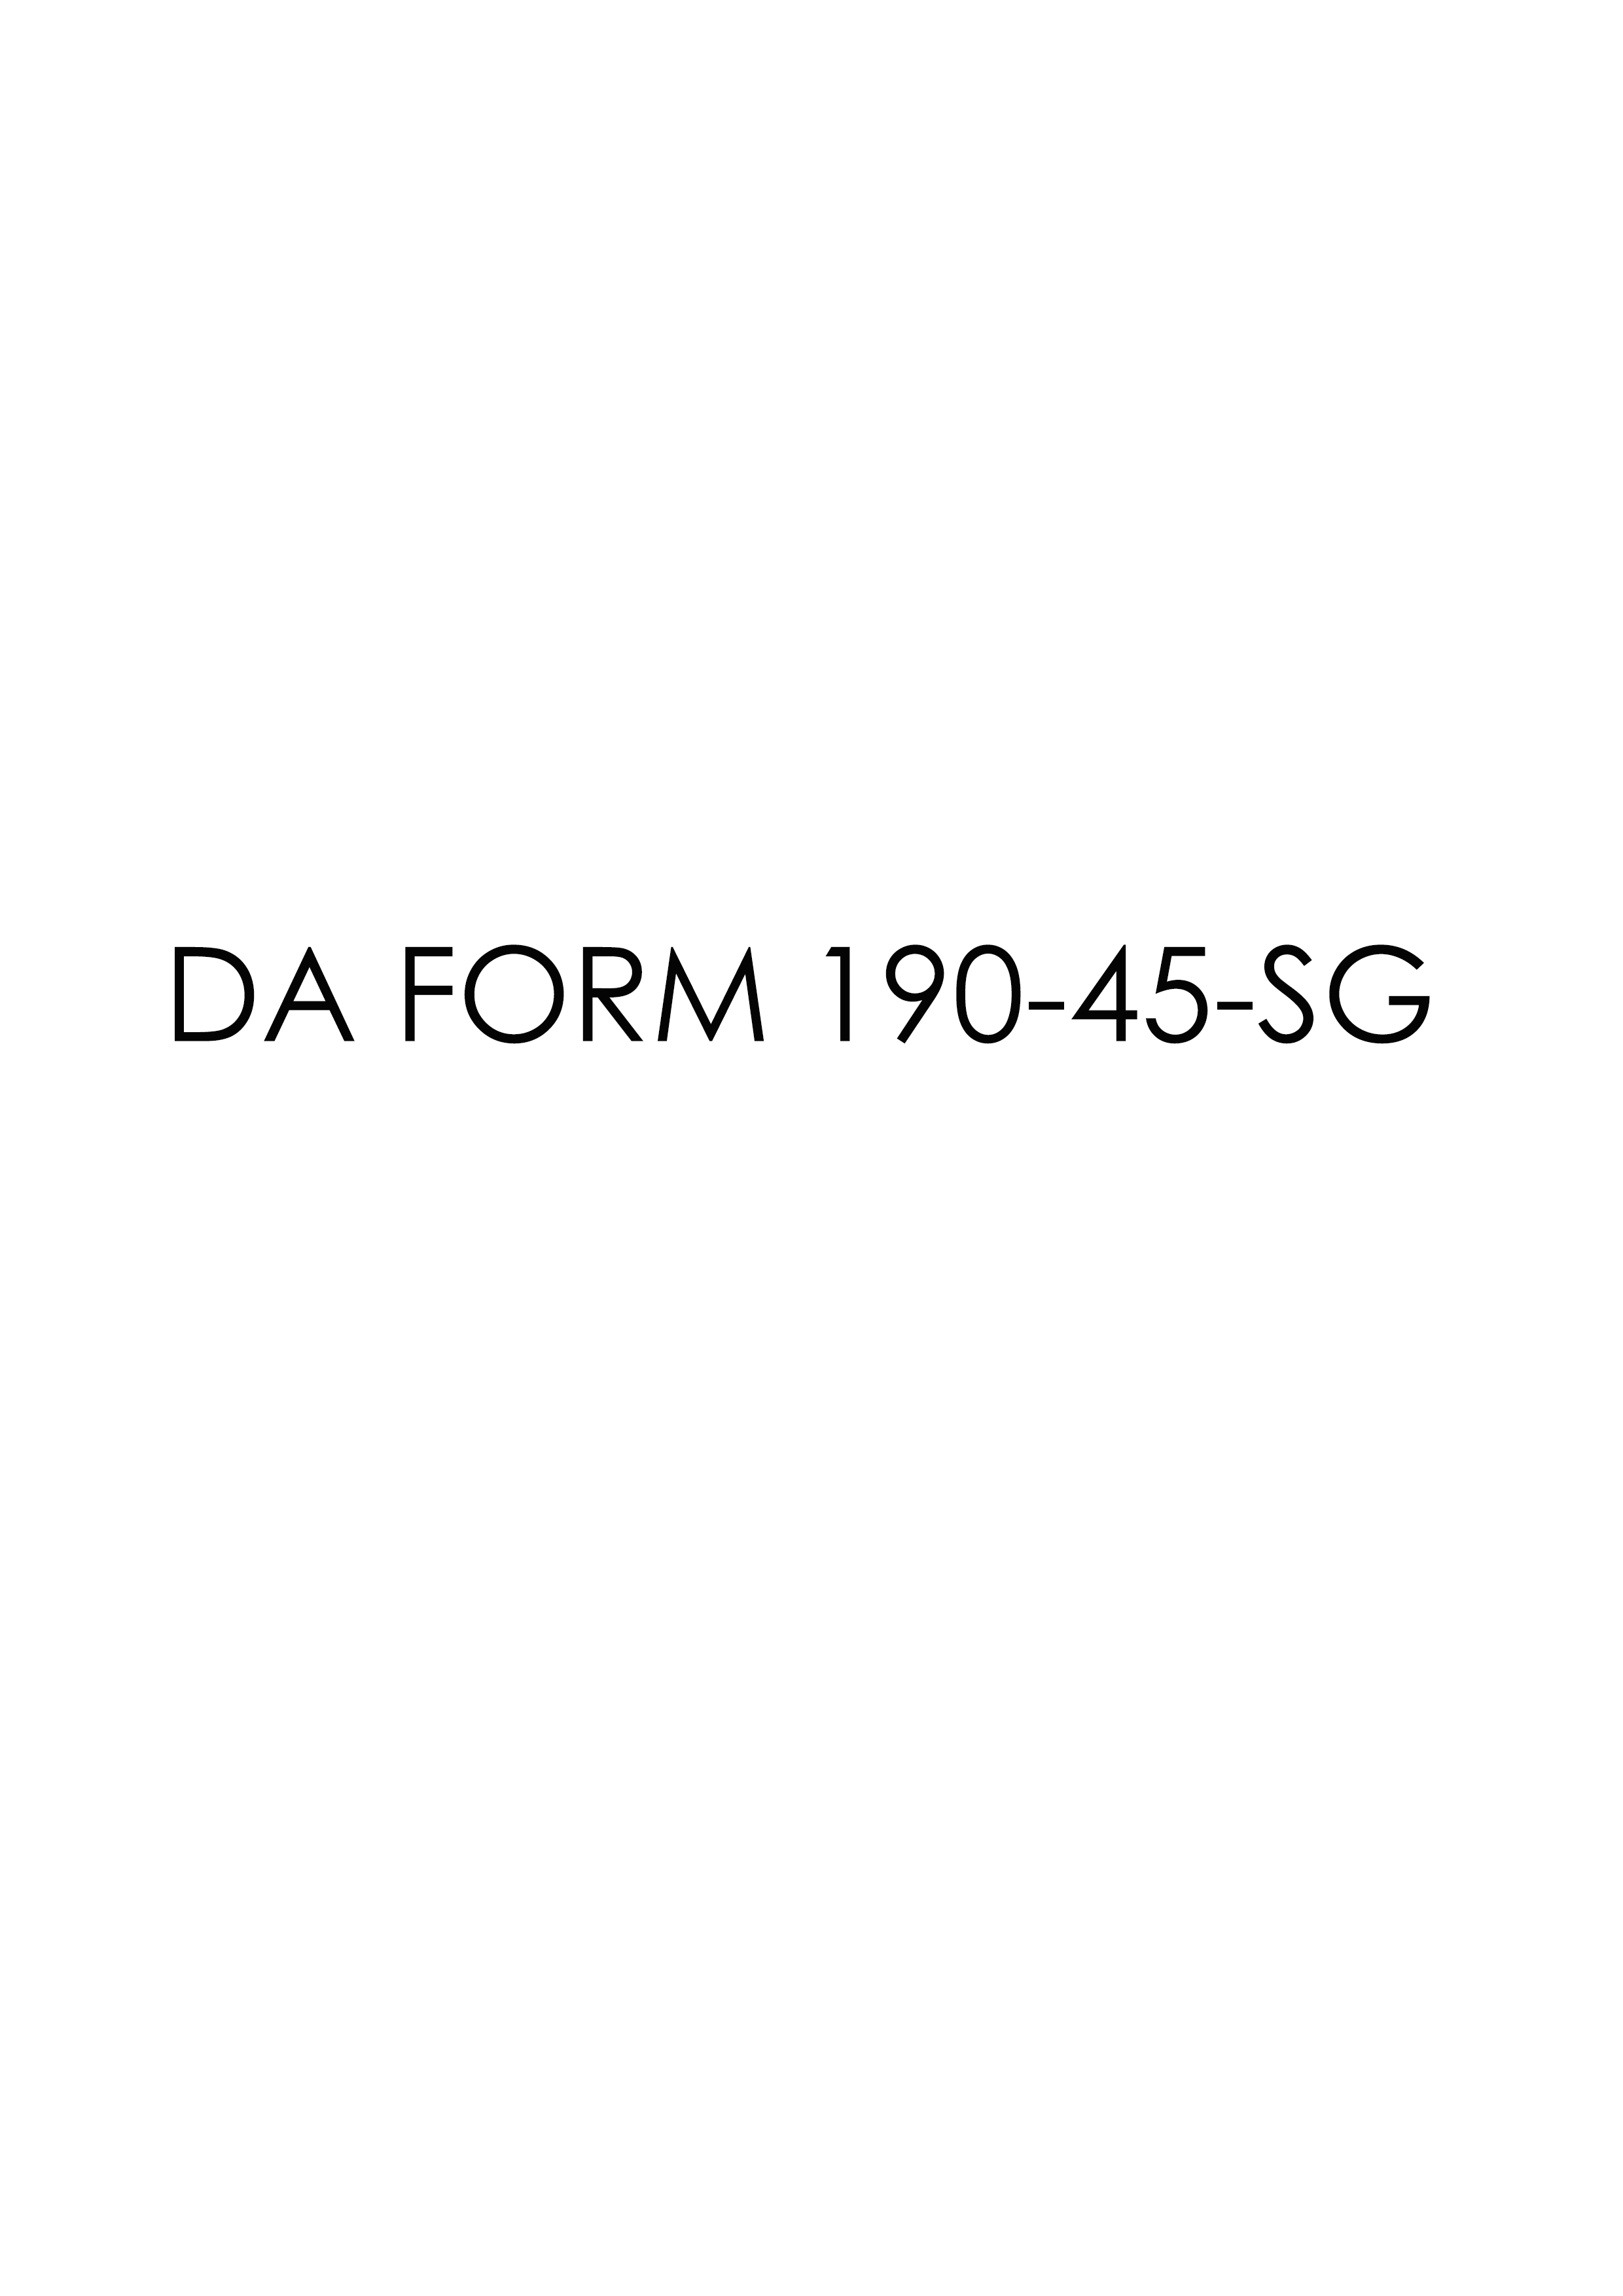 da Form 190-45-SG fillable